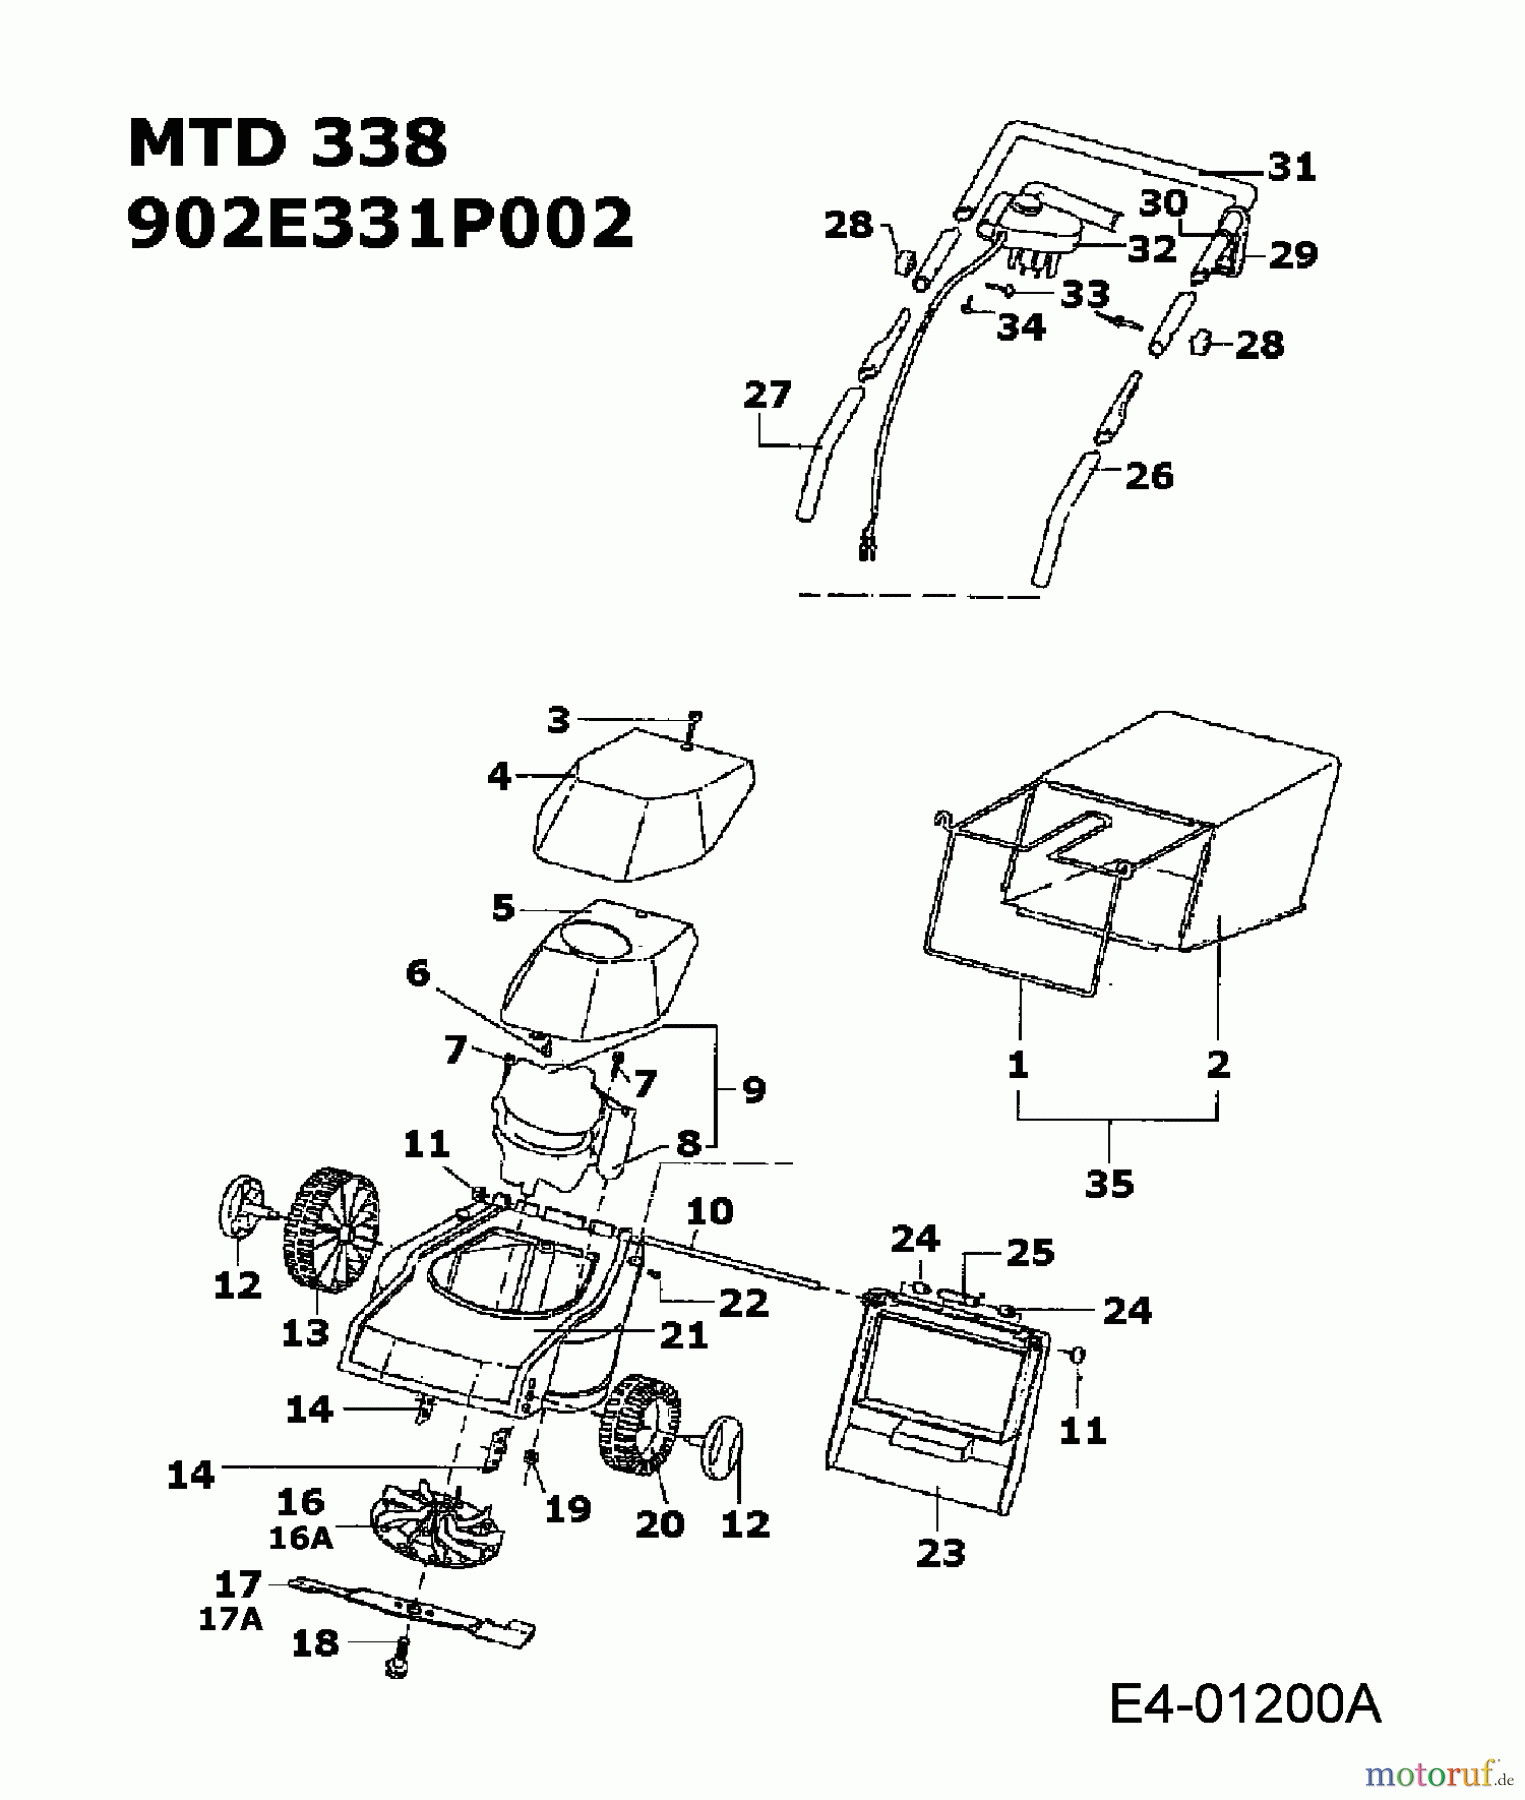  MTD Electric mower 338 P 902E331P002  (1995) Basic machine